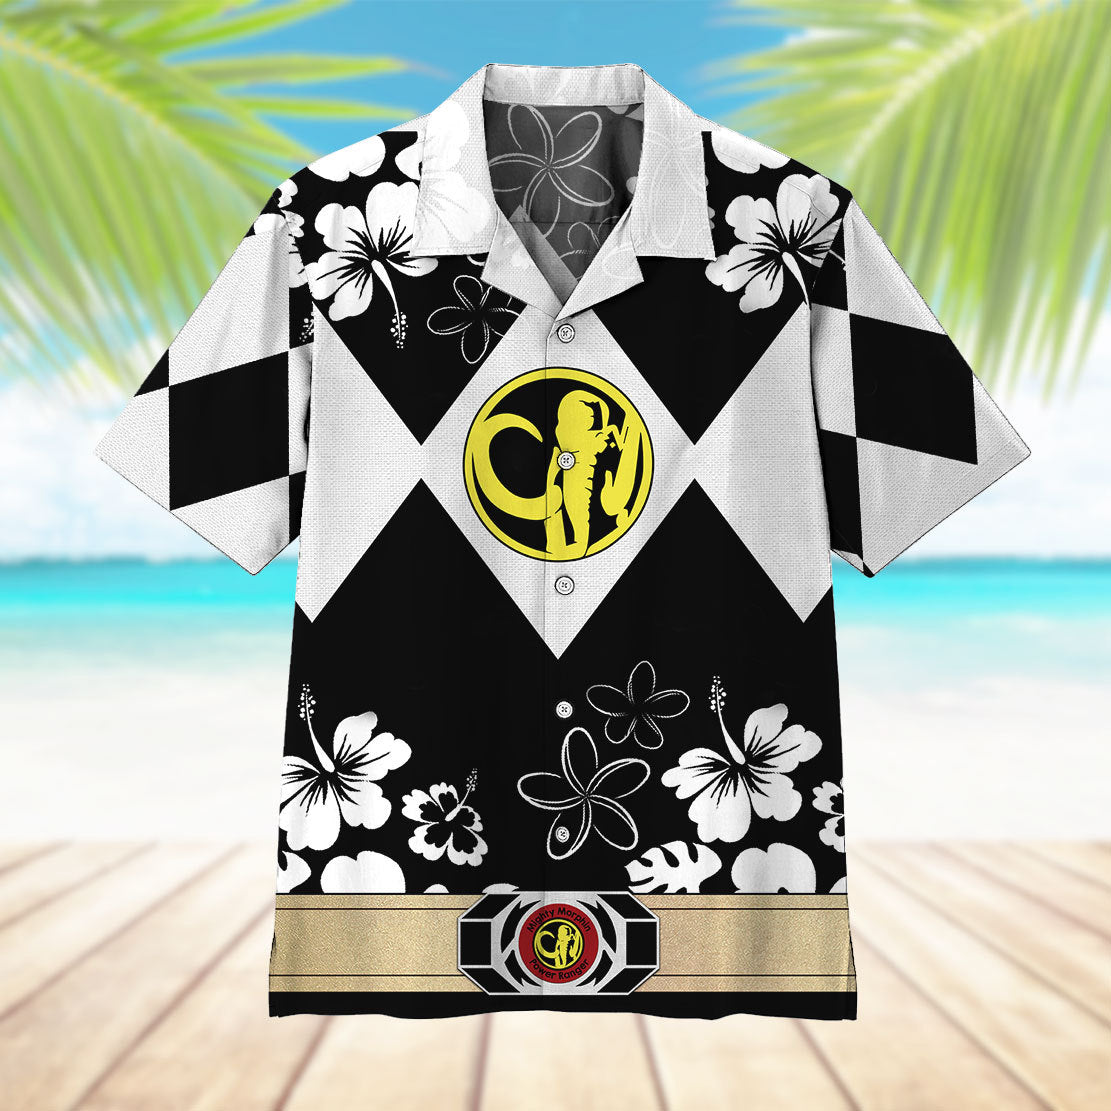 Mighty Morphin Power Ranger Black Hawaii Shirt